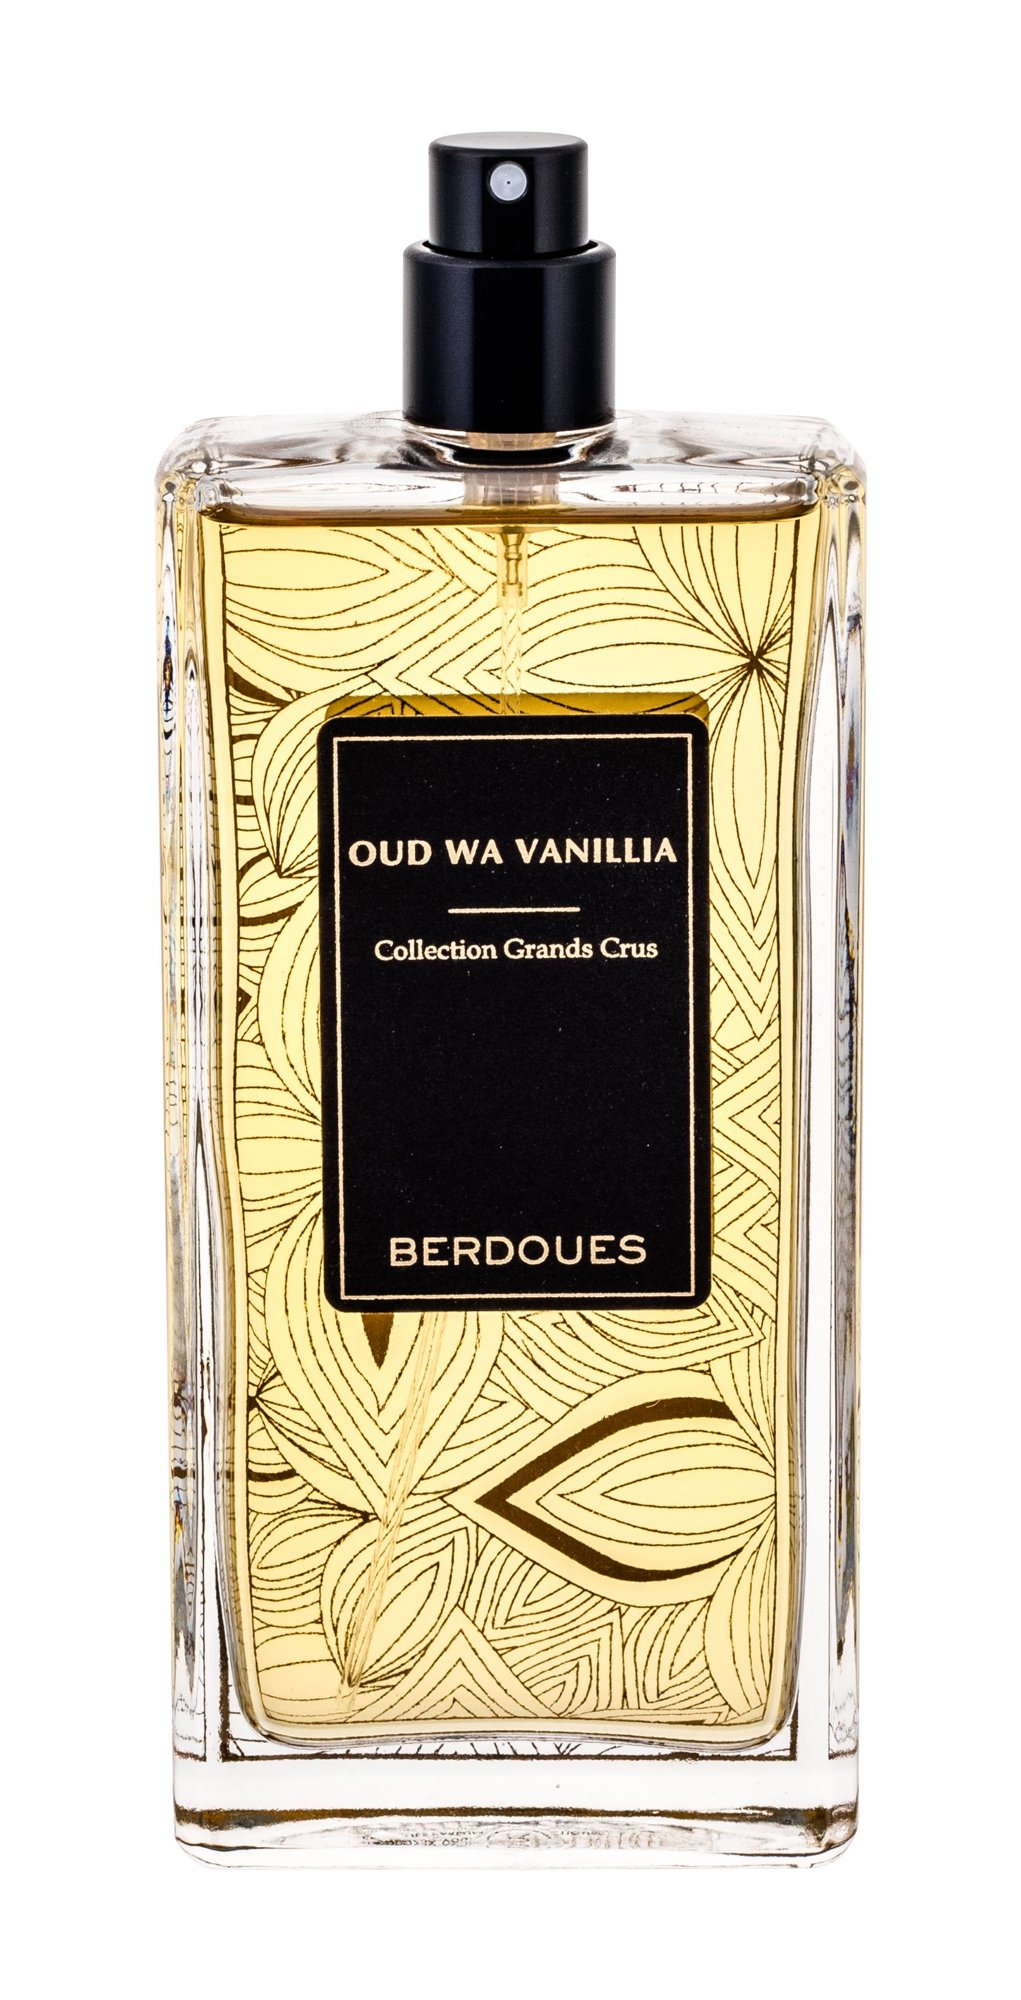 Berdoues Collection Grands Crus Oud Wa Vanillia